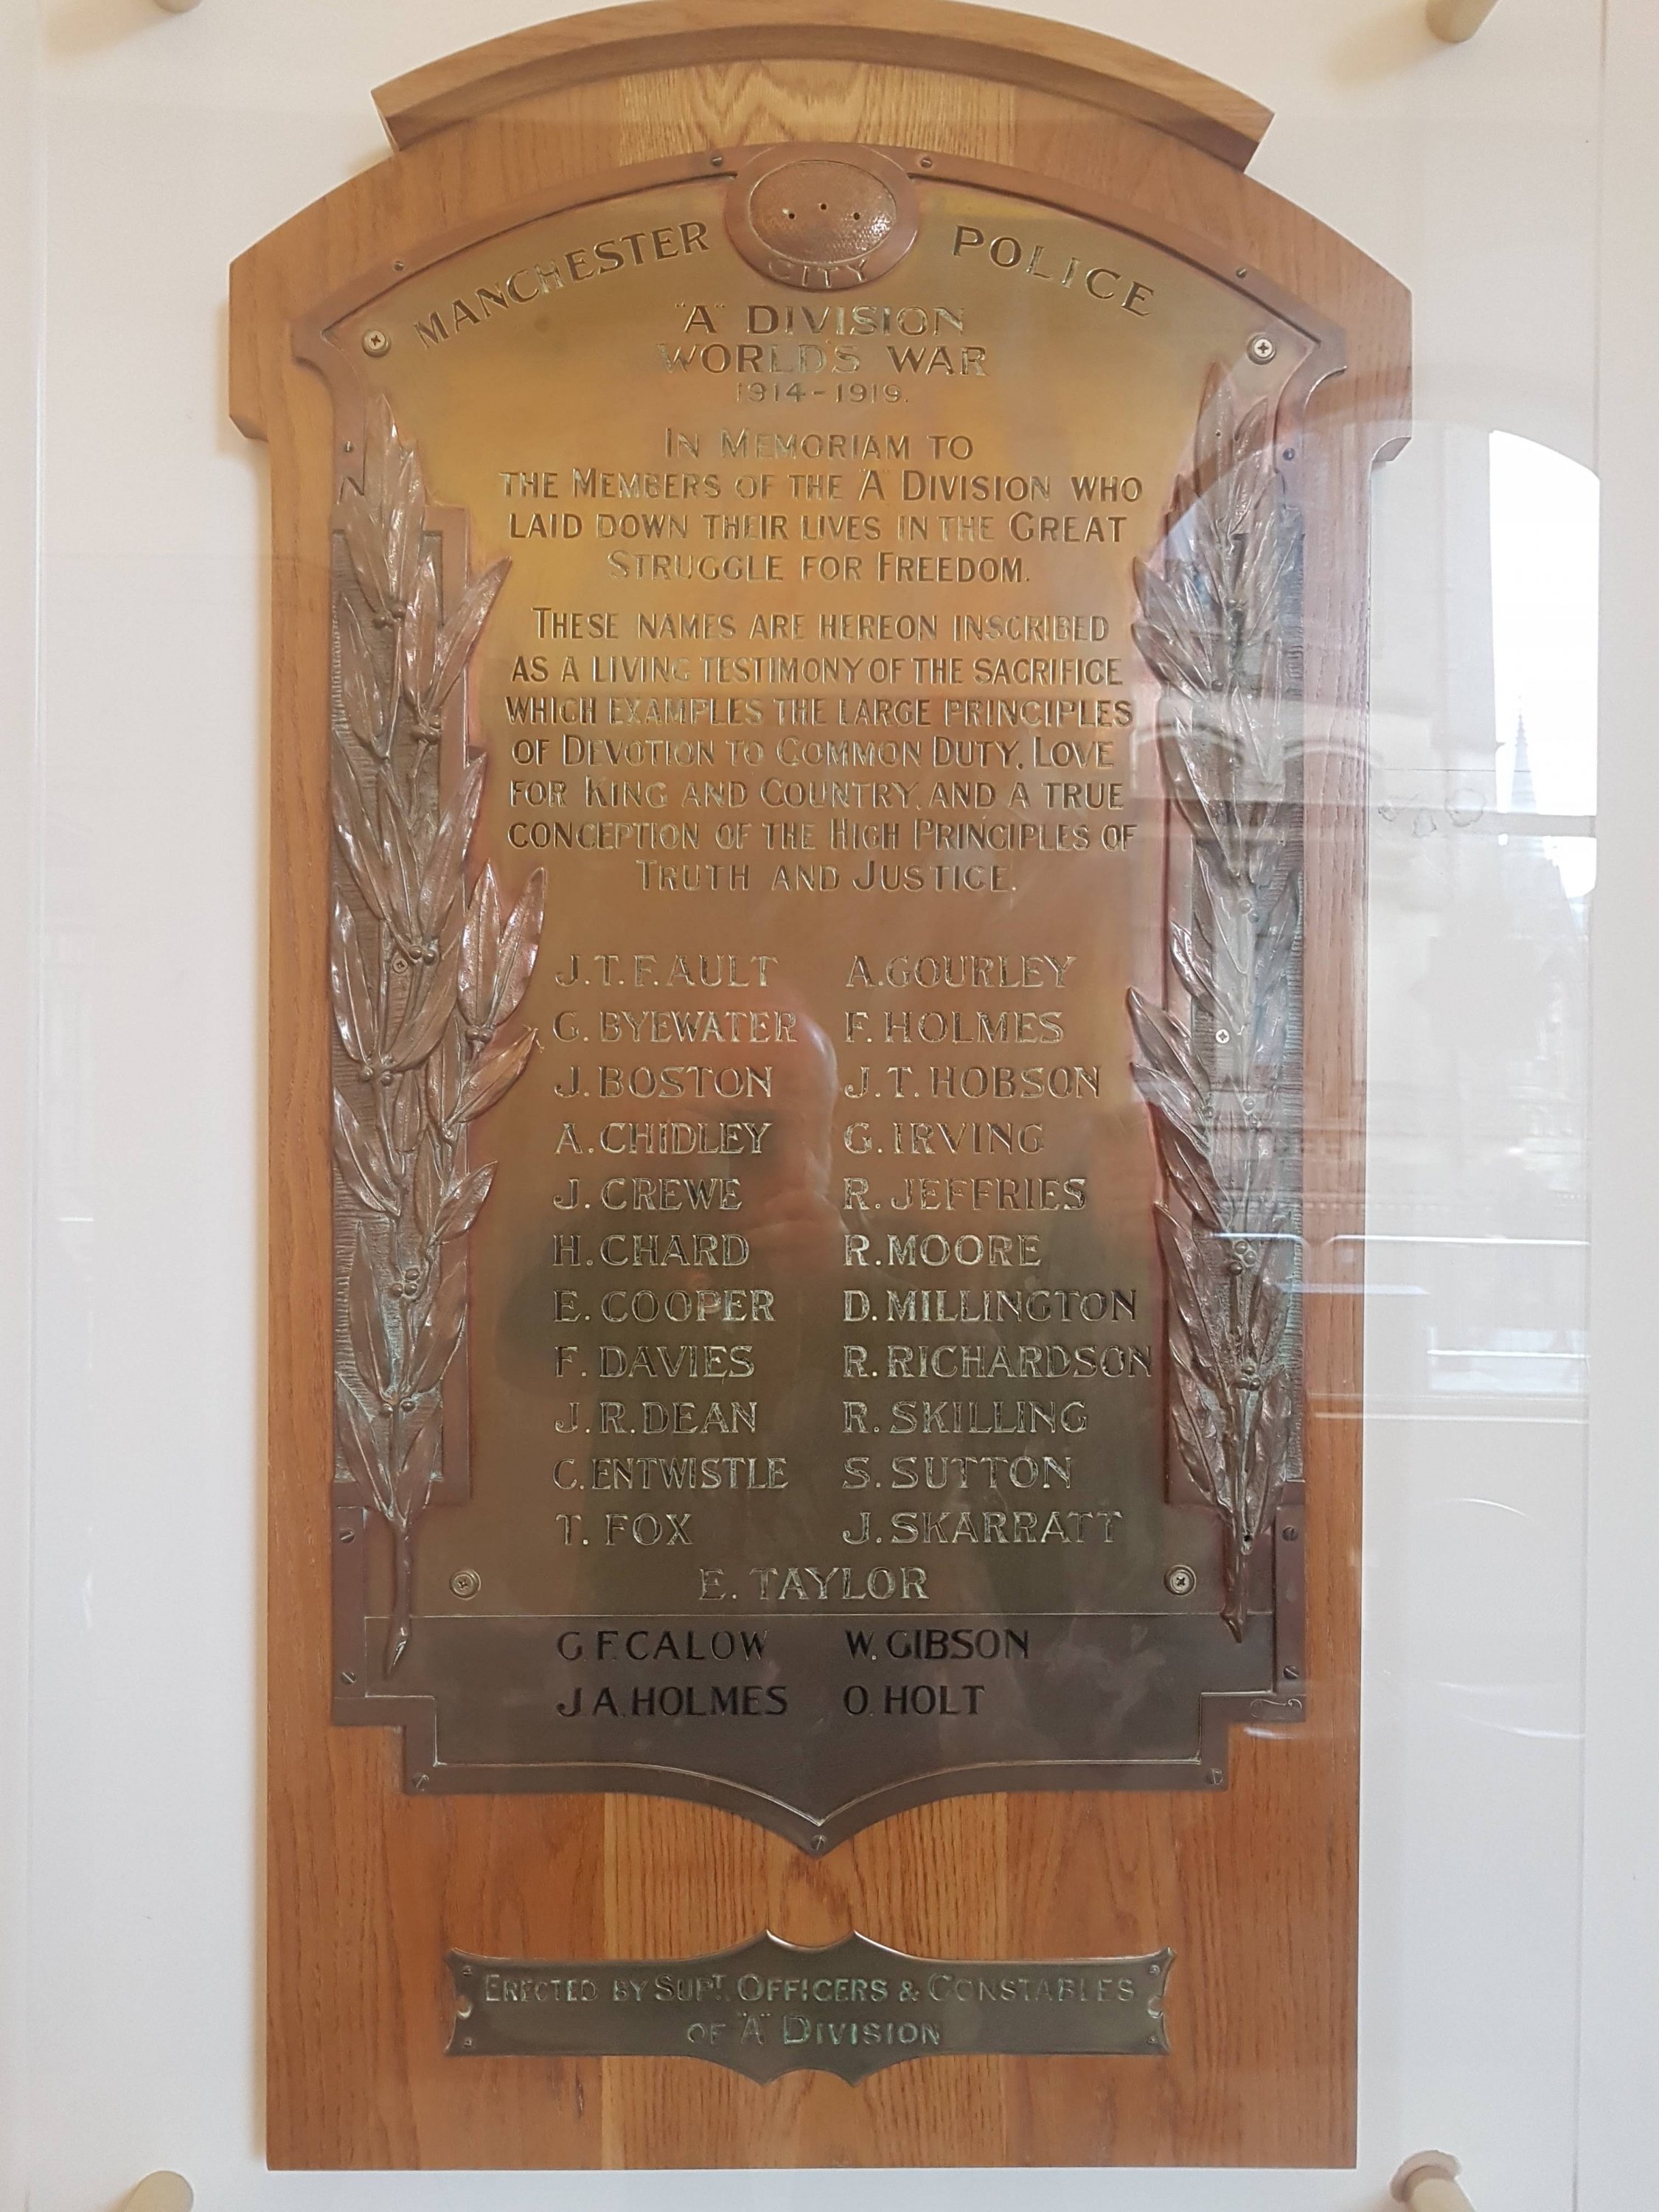 Manchester Police "A" Division memorial plaque